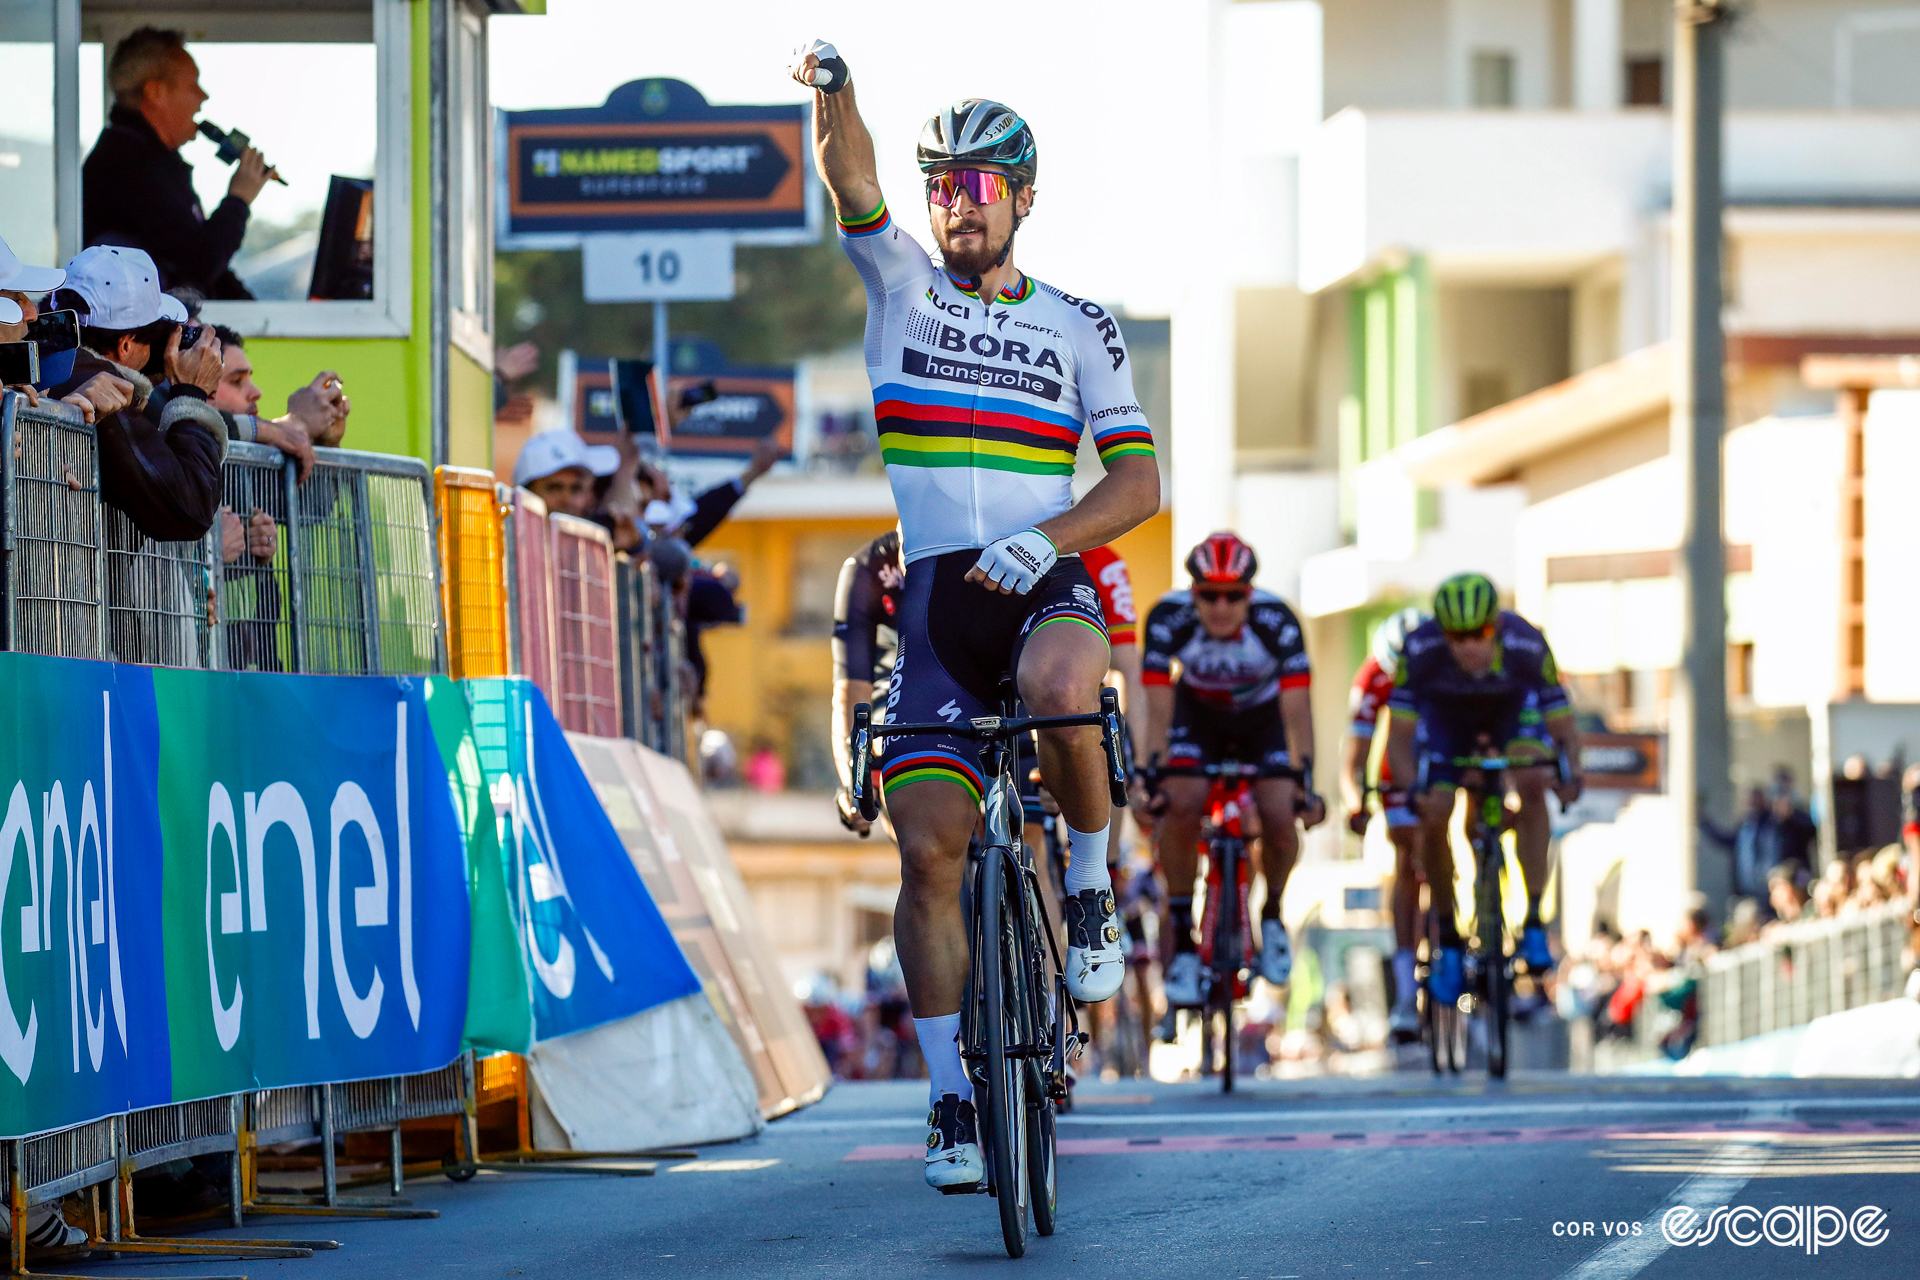 Peter Sagan celebrates winning a stage at the 2017 Tirreno-Adriatico.